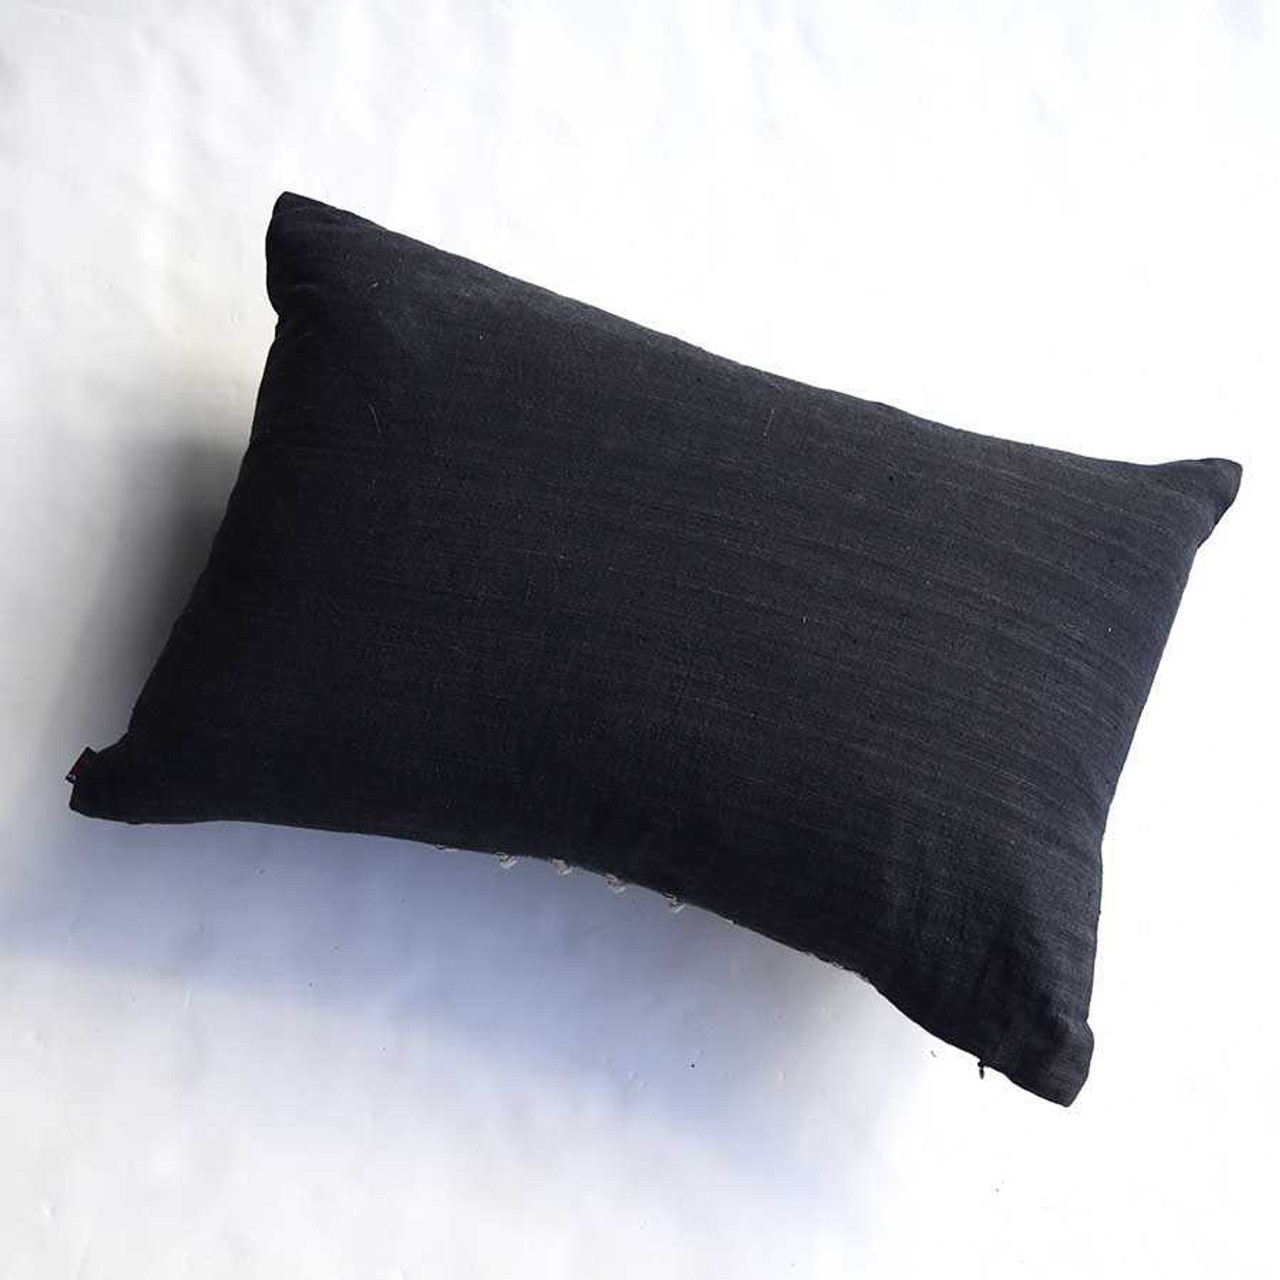 Mezcla' Black Stripe Lumbar Pillow Cover, Artisan Made Home Goods